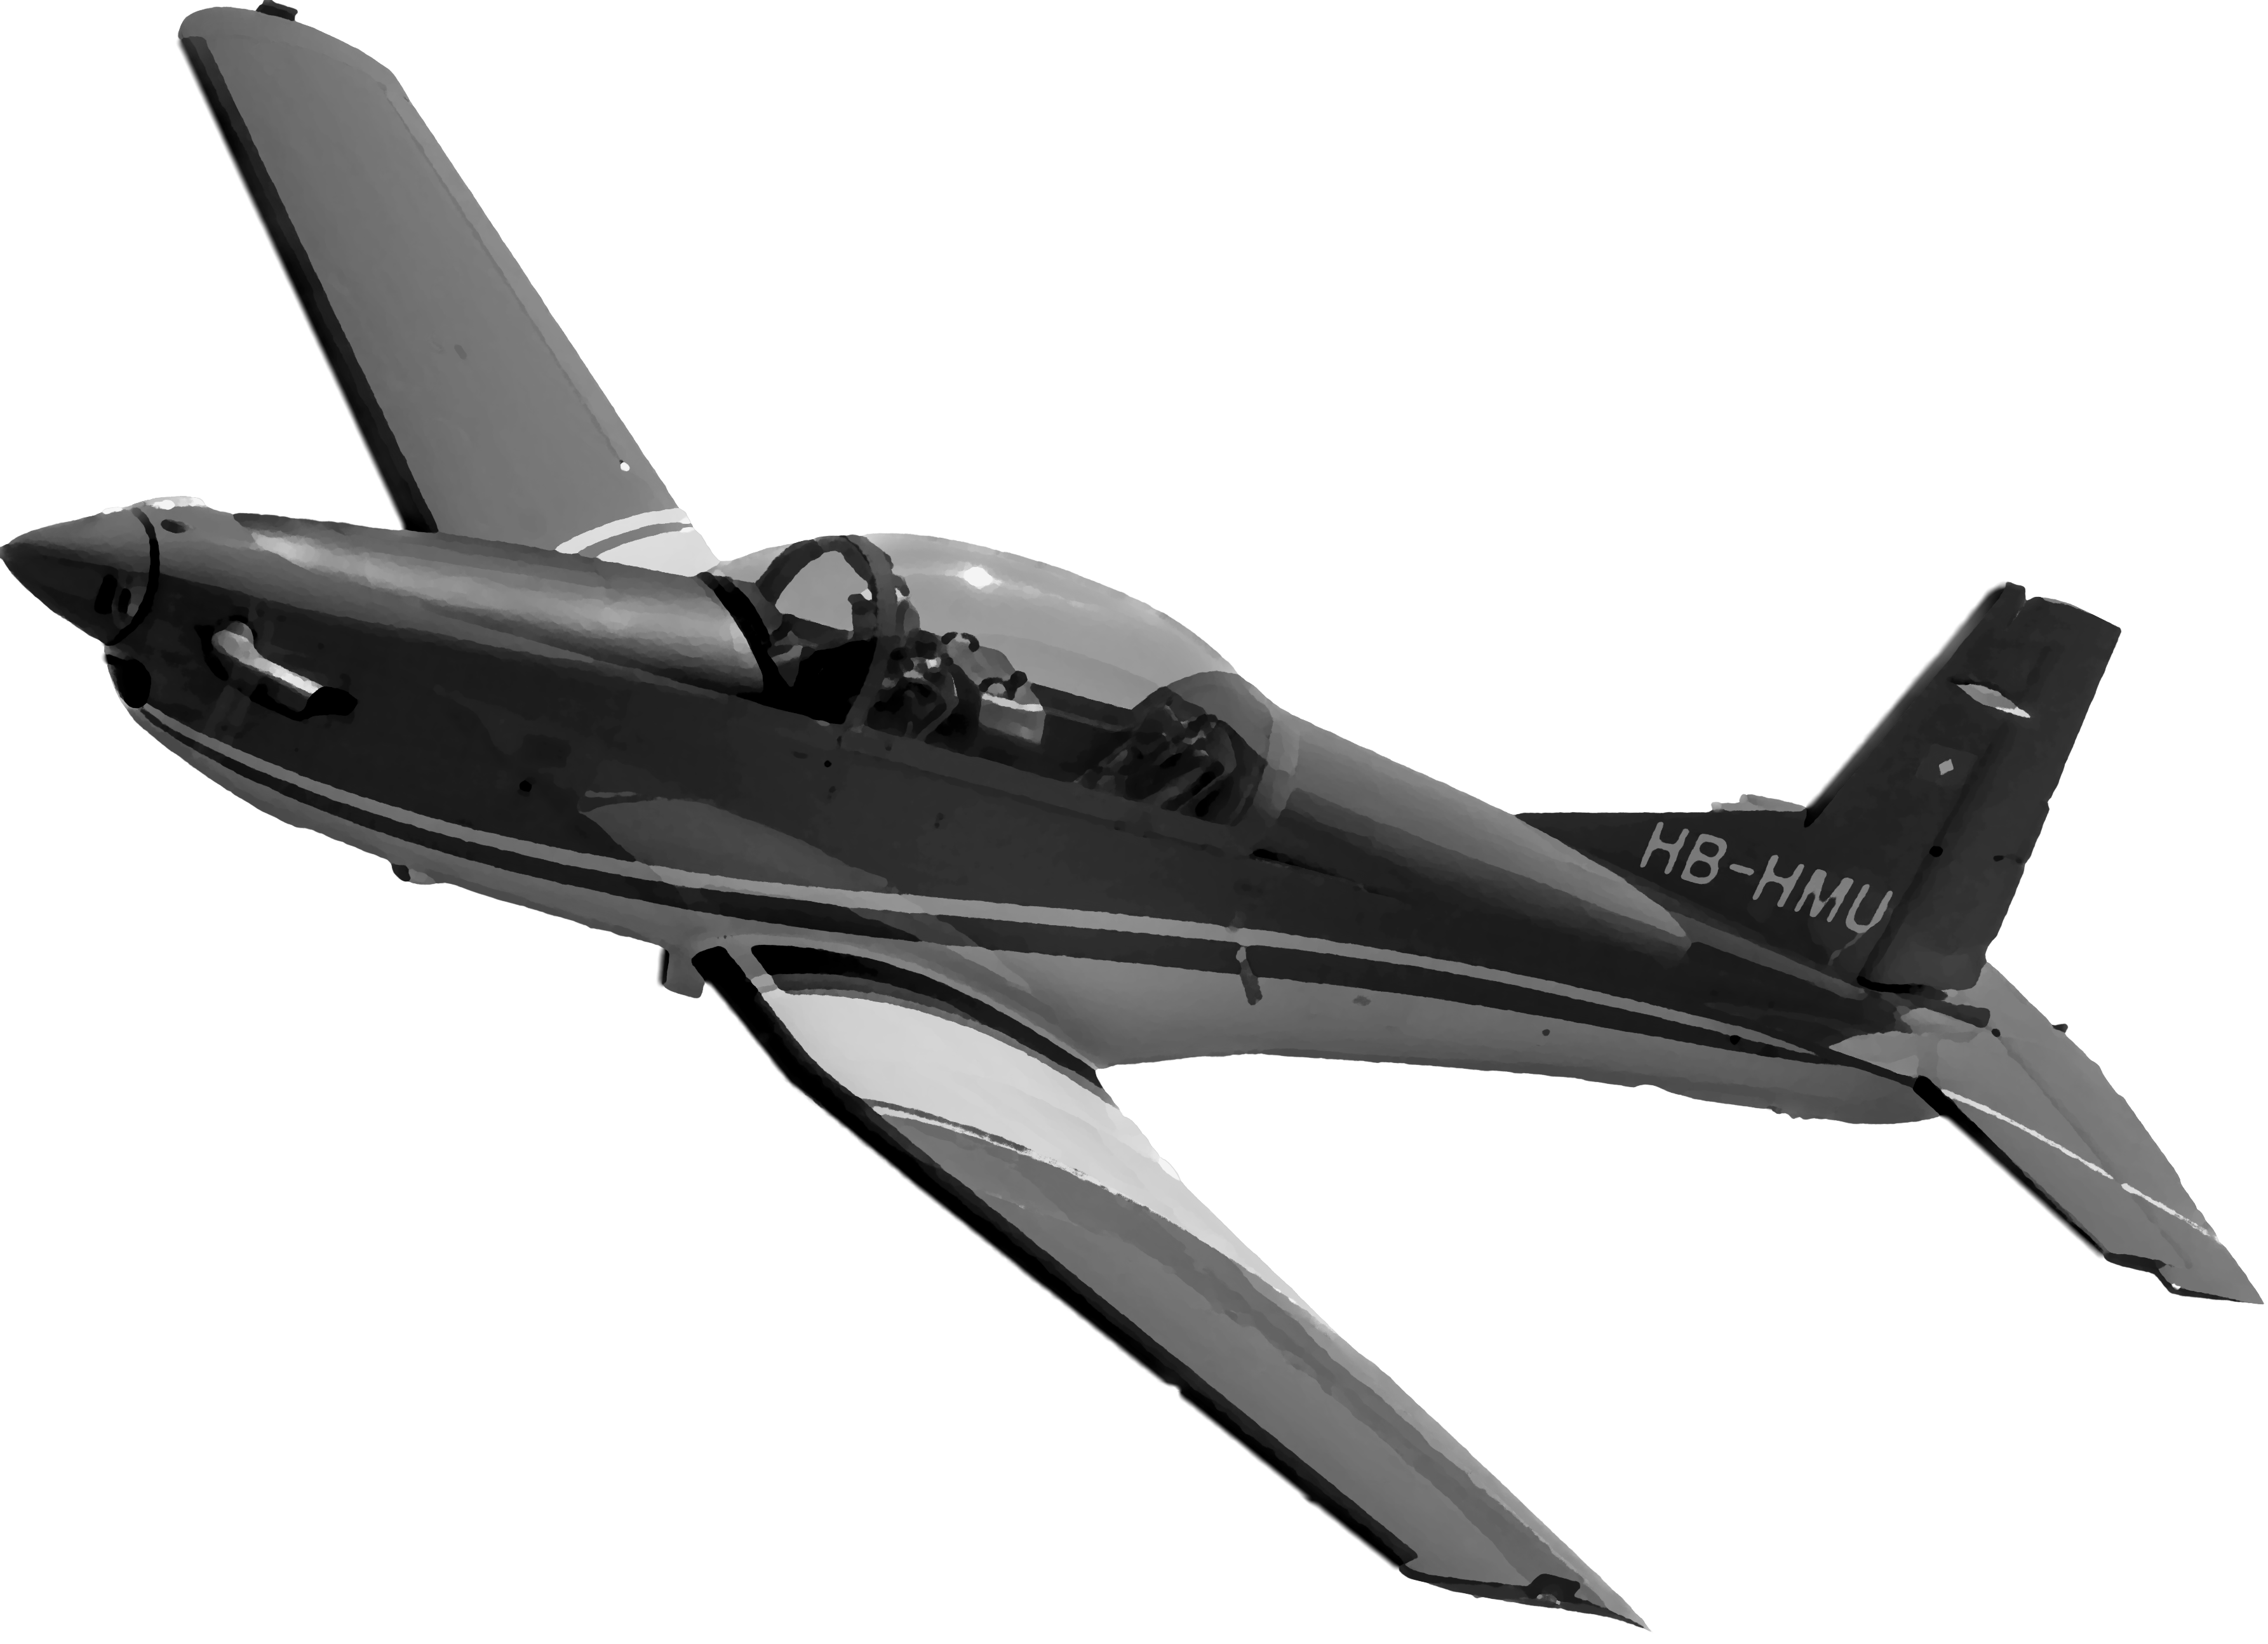 Pilatus PC-7 MkI “HB-HMU”